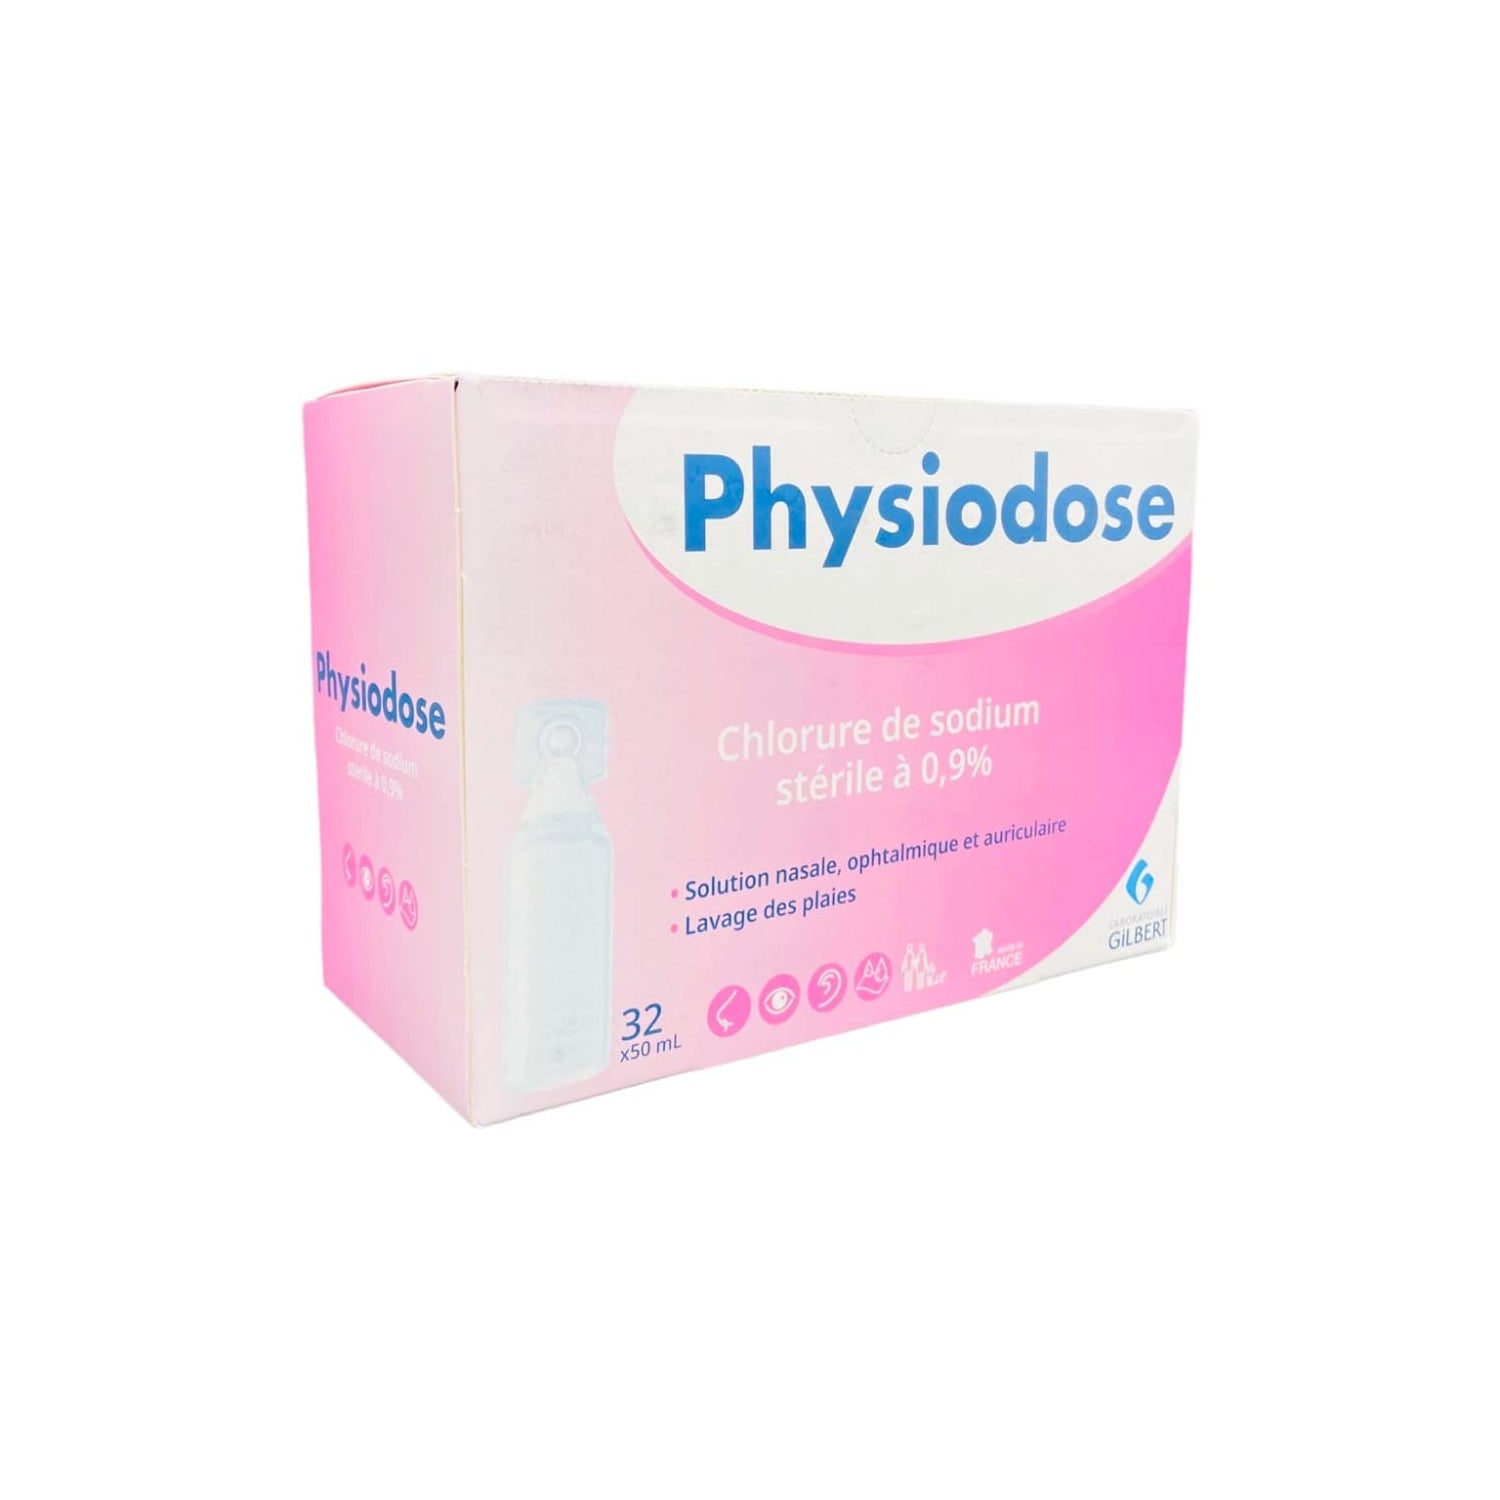 Physiodose Sérum Physiologique, 15 x 5 ml